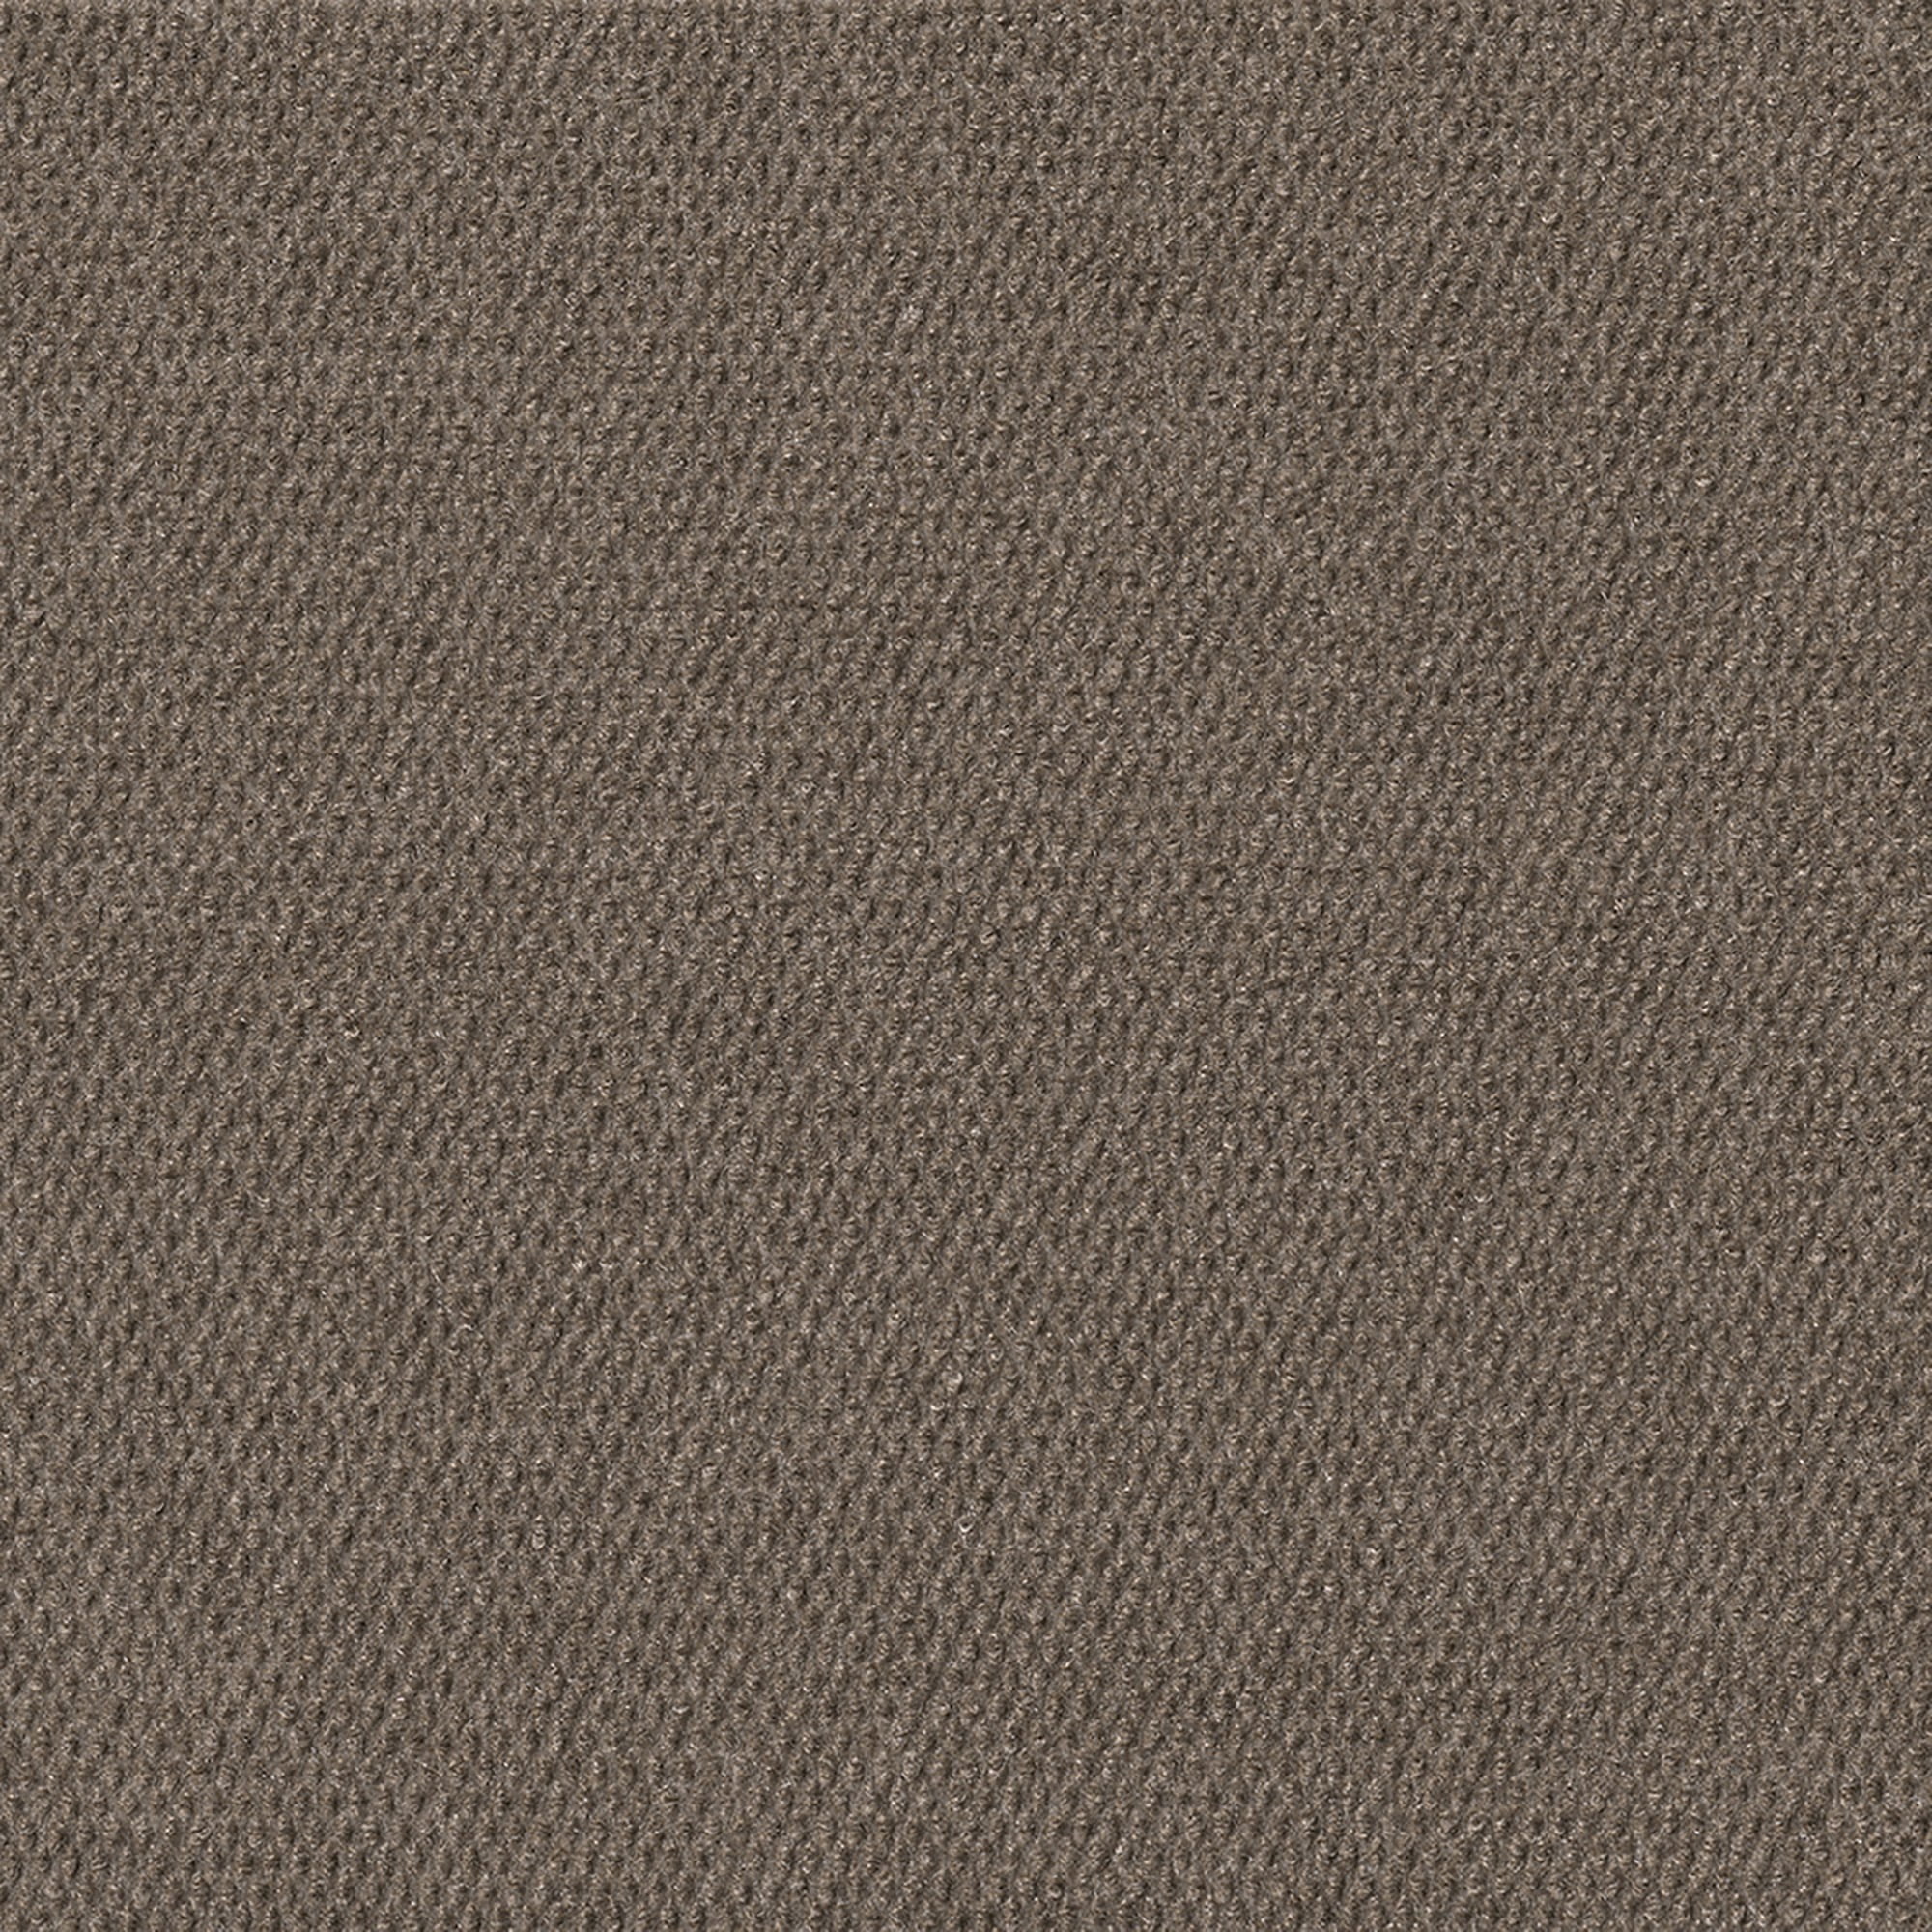 Hilltop Brown Carpet Tiles 18 X Indoor Outdoor L And Stick 36 Sq Ft Per Box Pack Of 16 Com